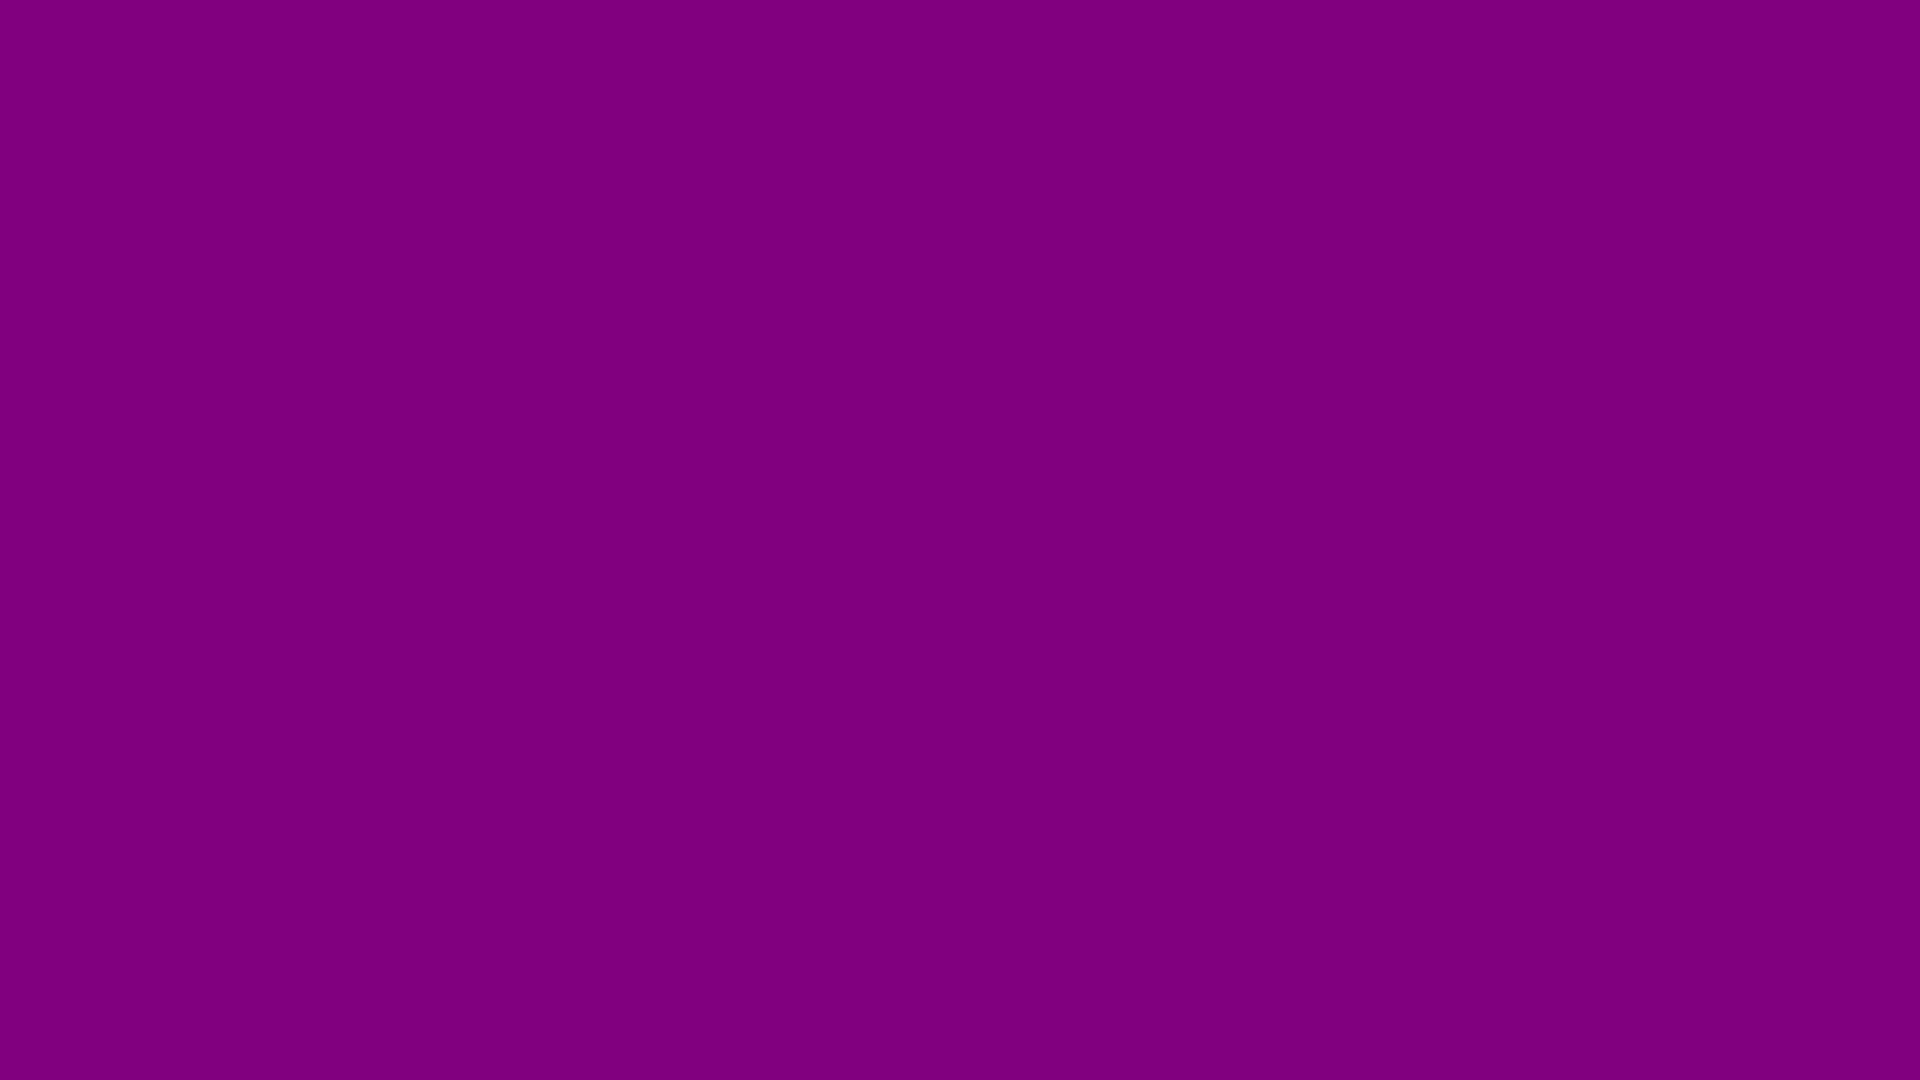 Purple screen background